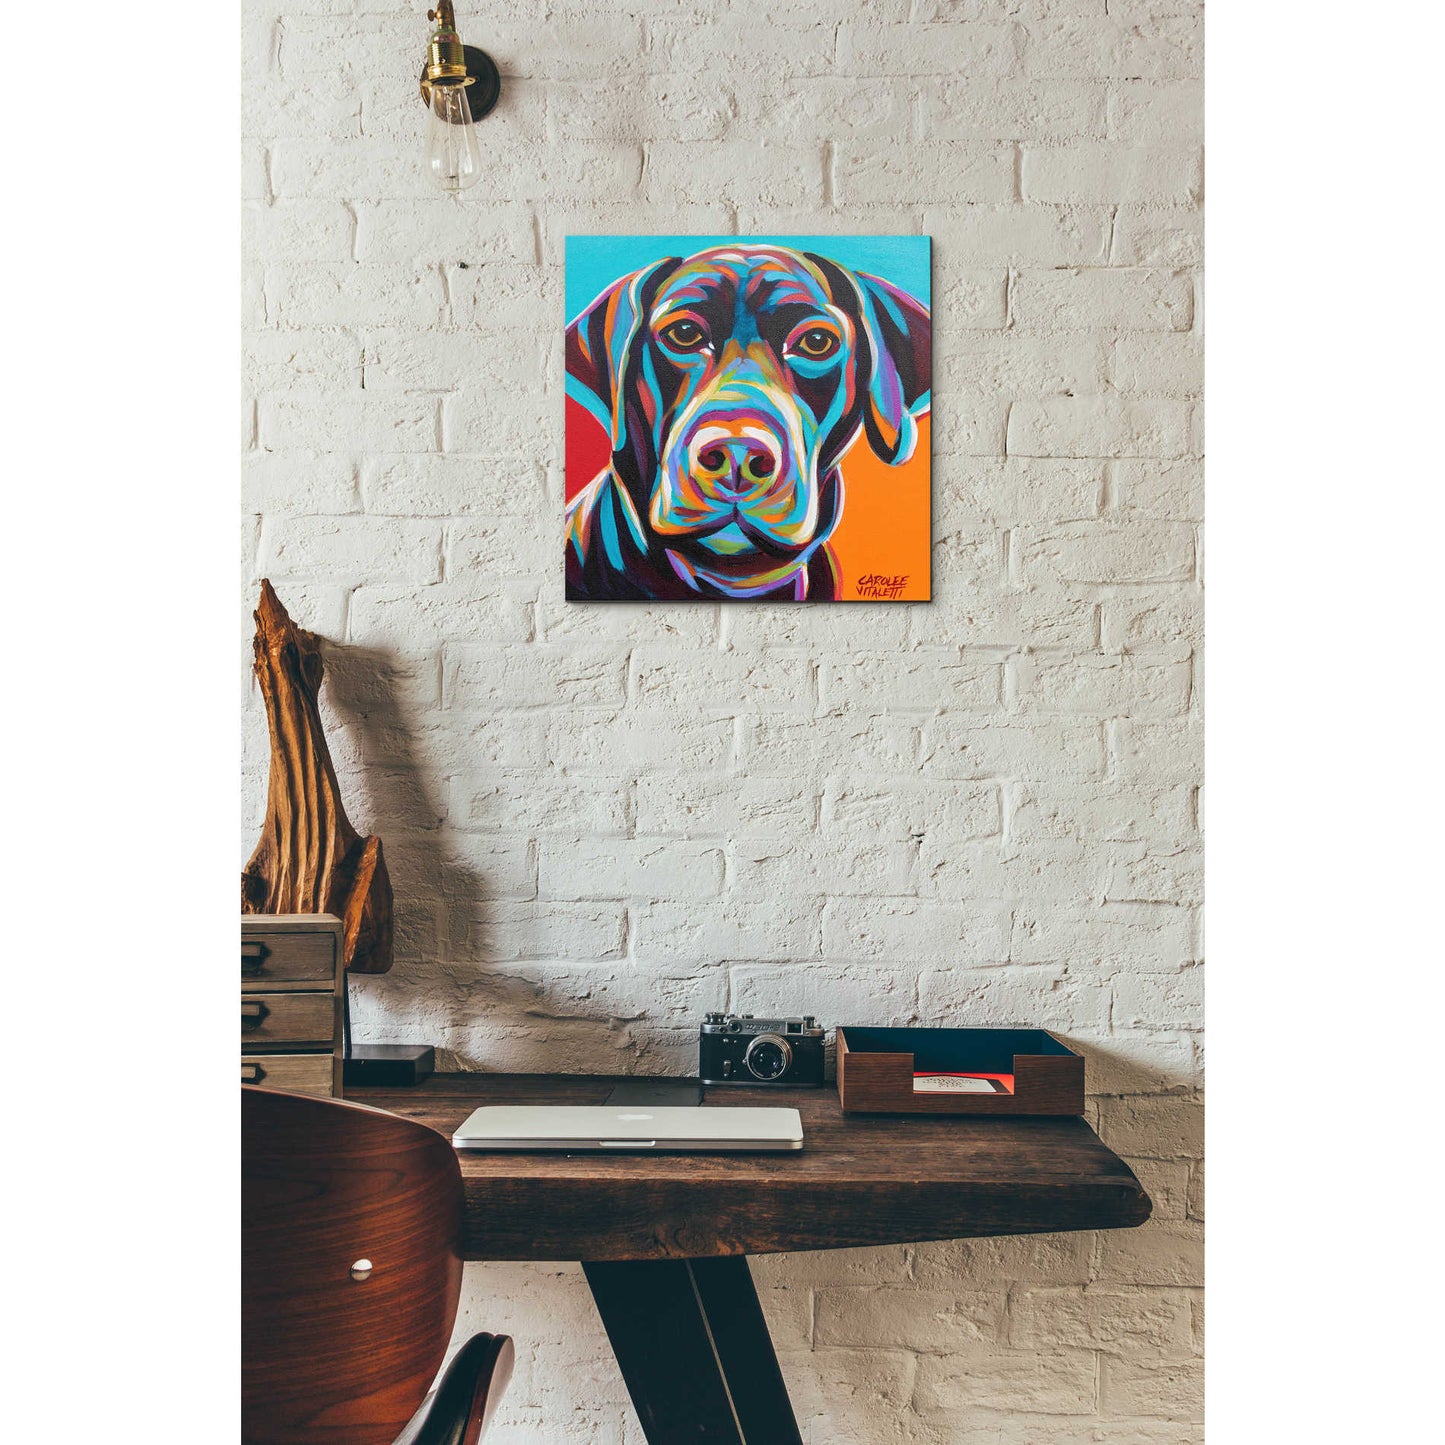 Epic Art 'Dog Friend II' by Carolee Vitaletti, Acrylic Glass Wall Art,12x12